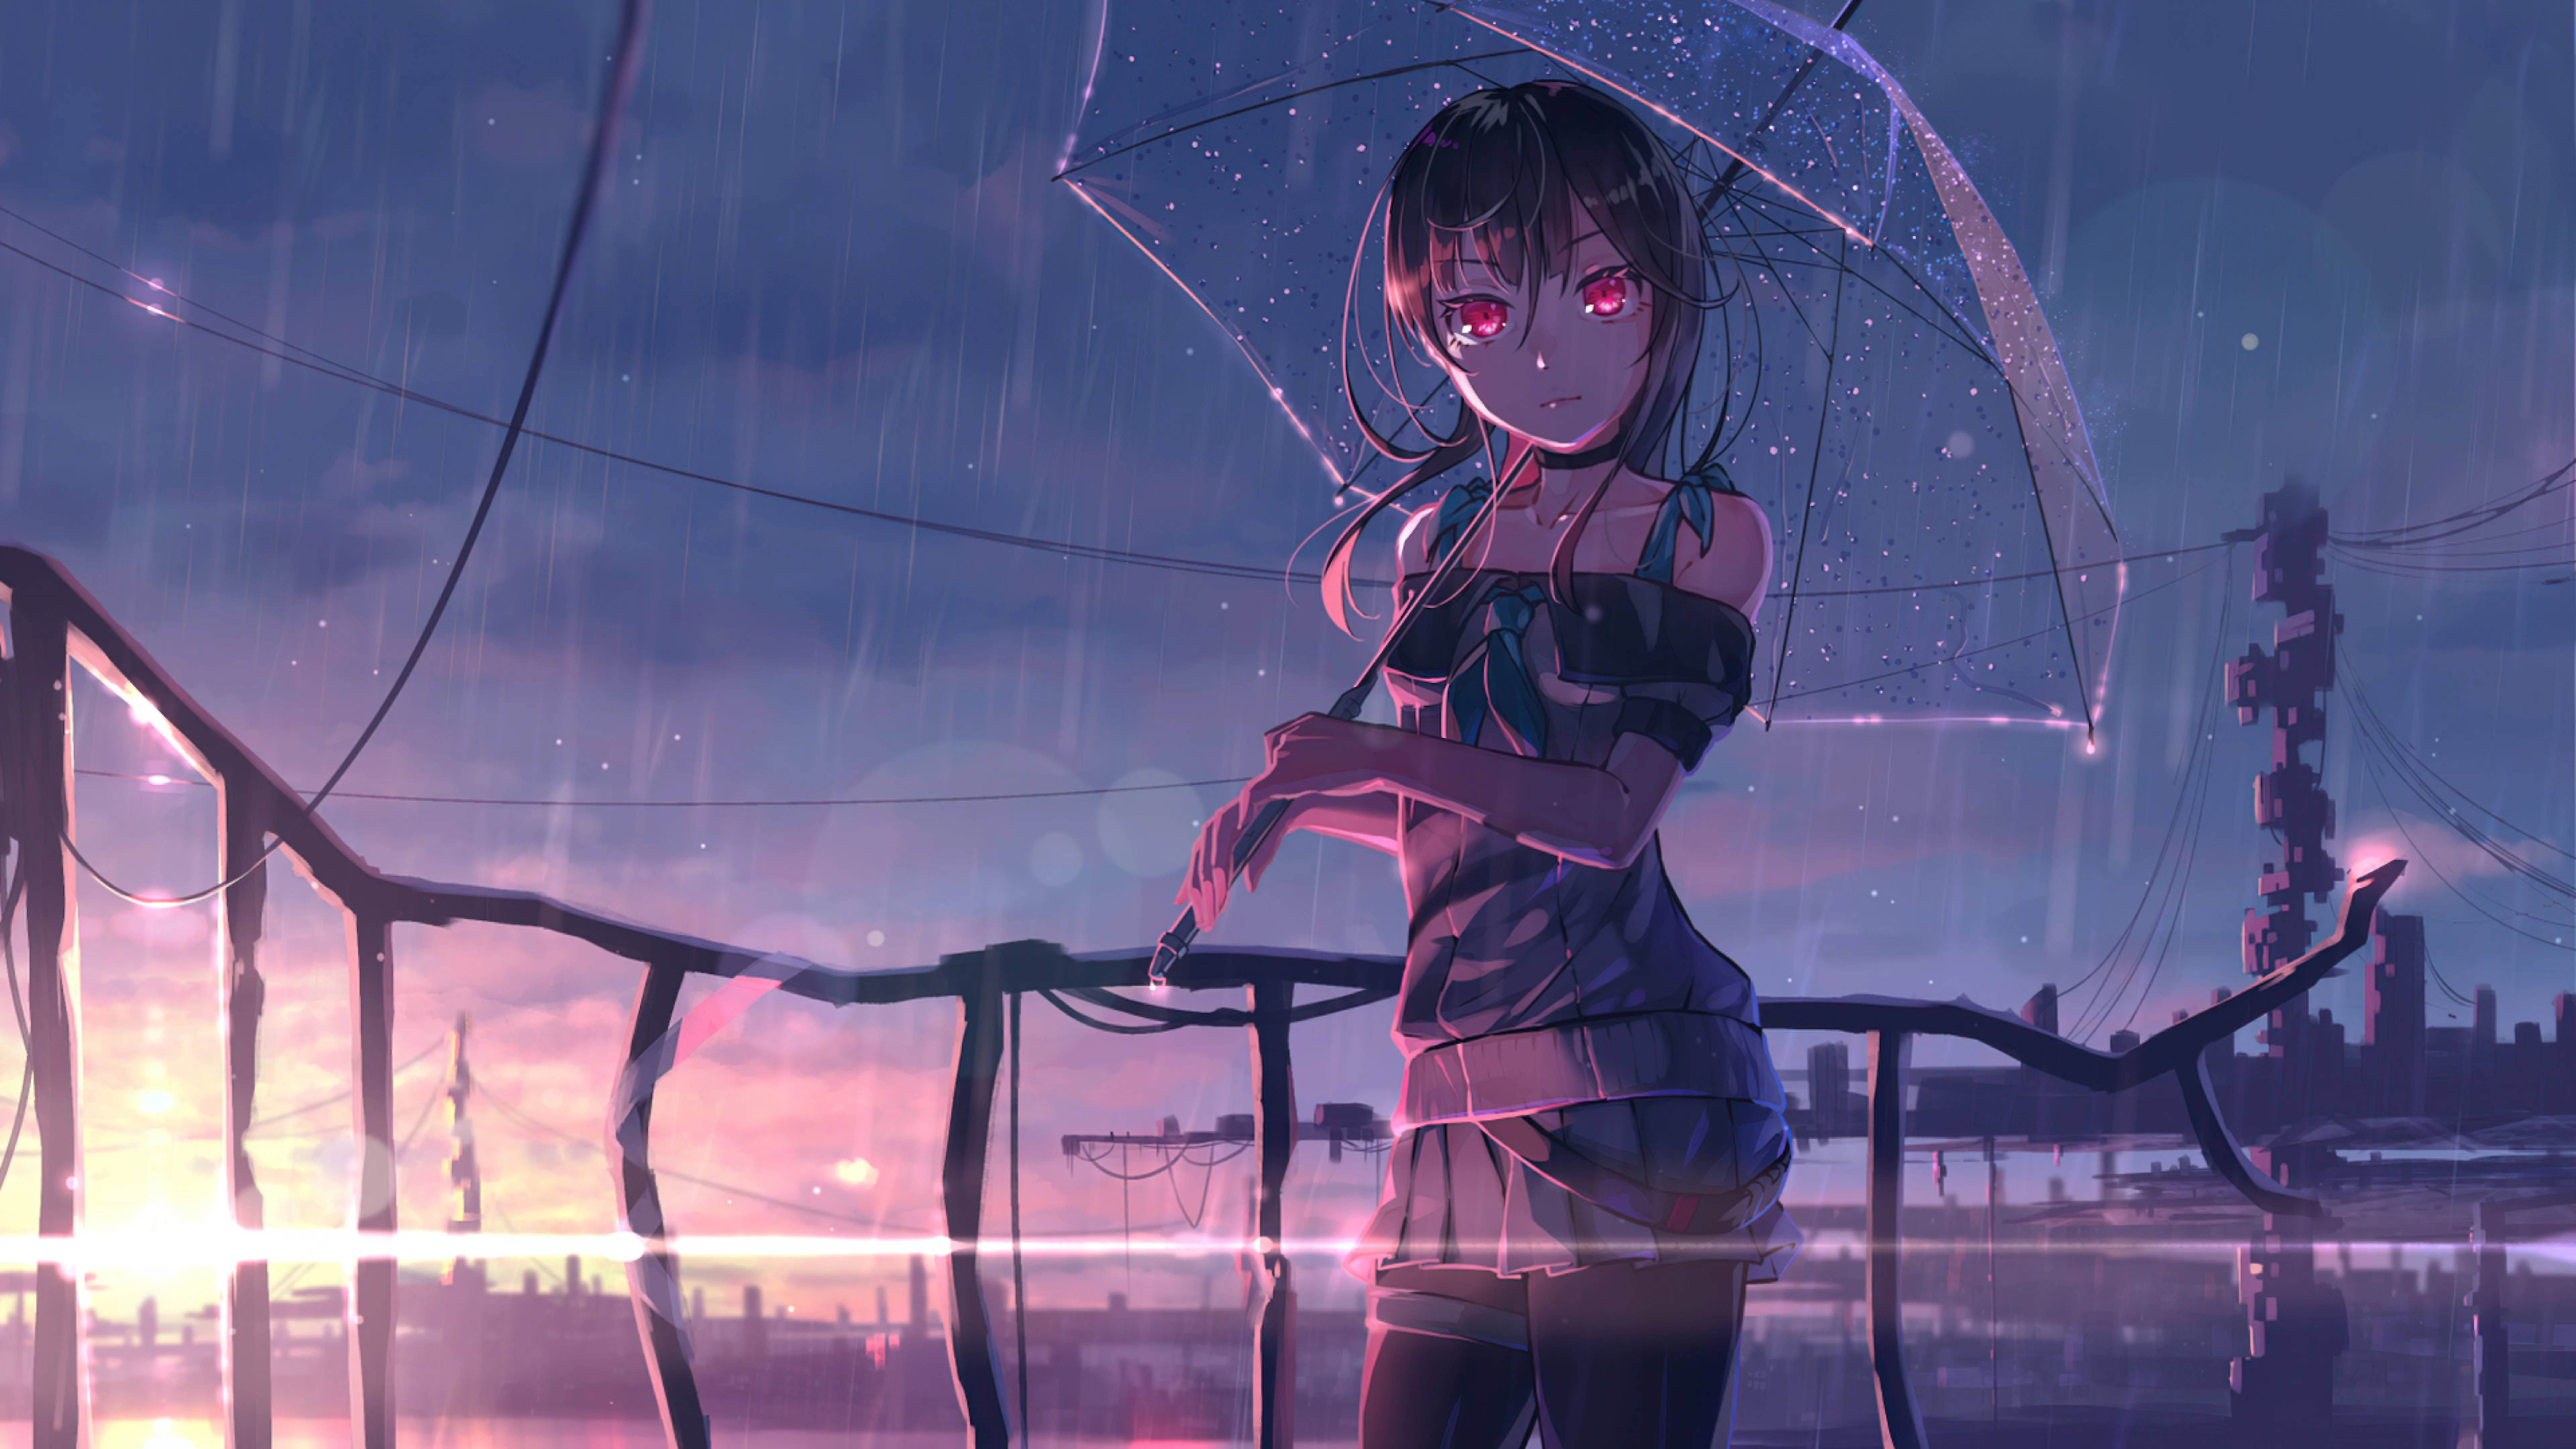 Download 8k Anime Girl In Rain Wallpaper 